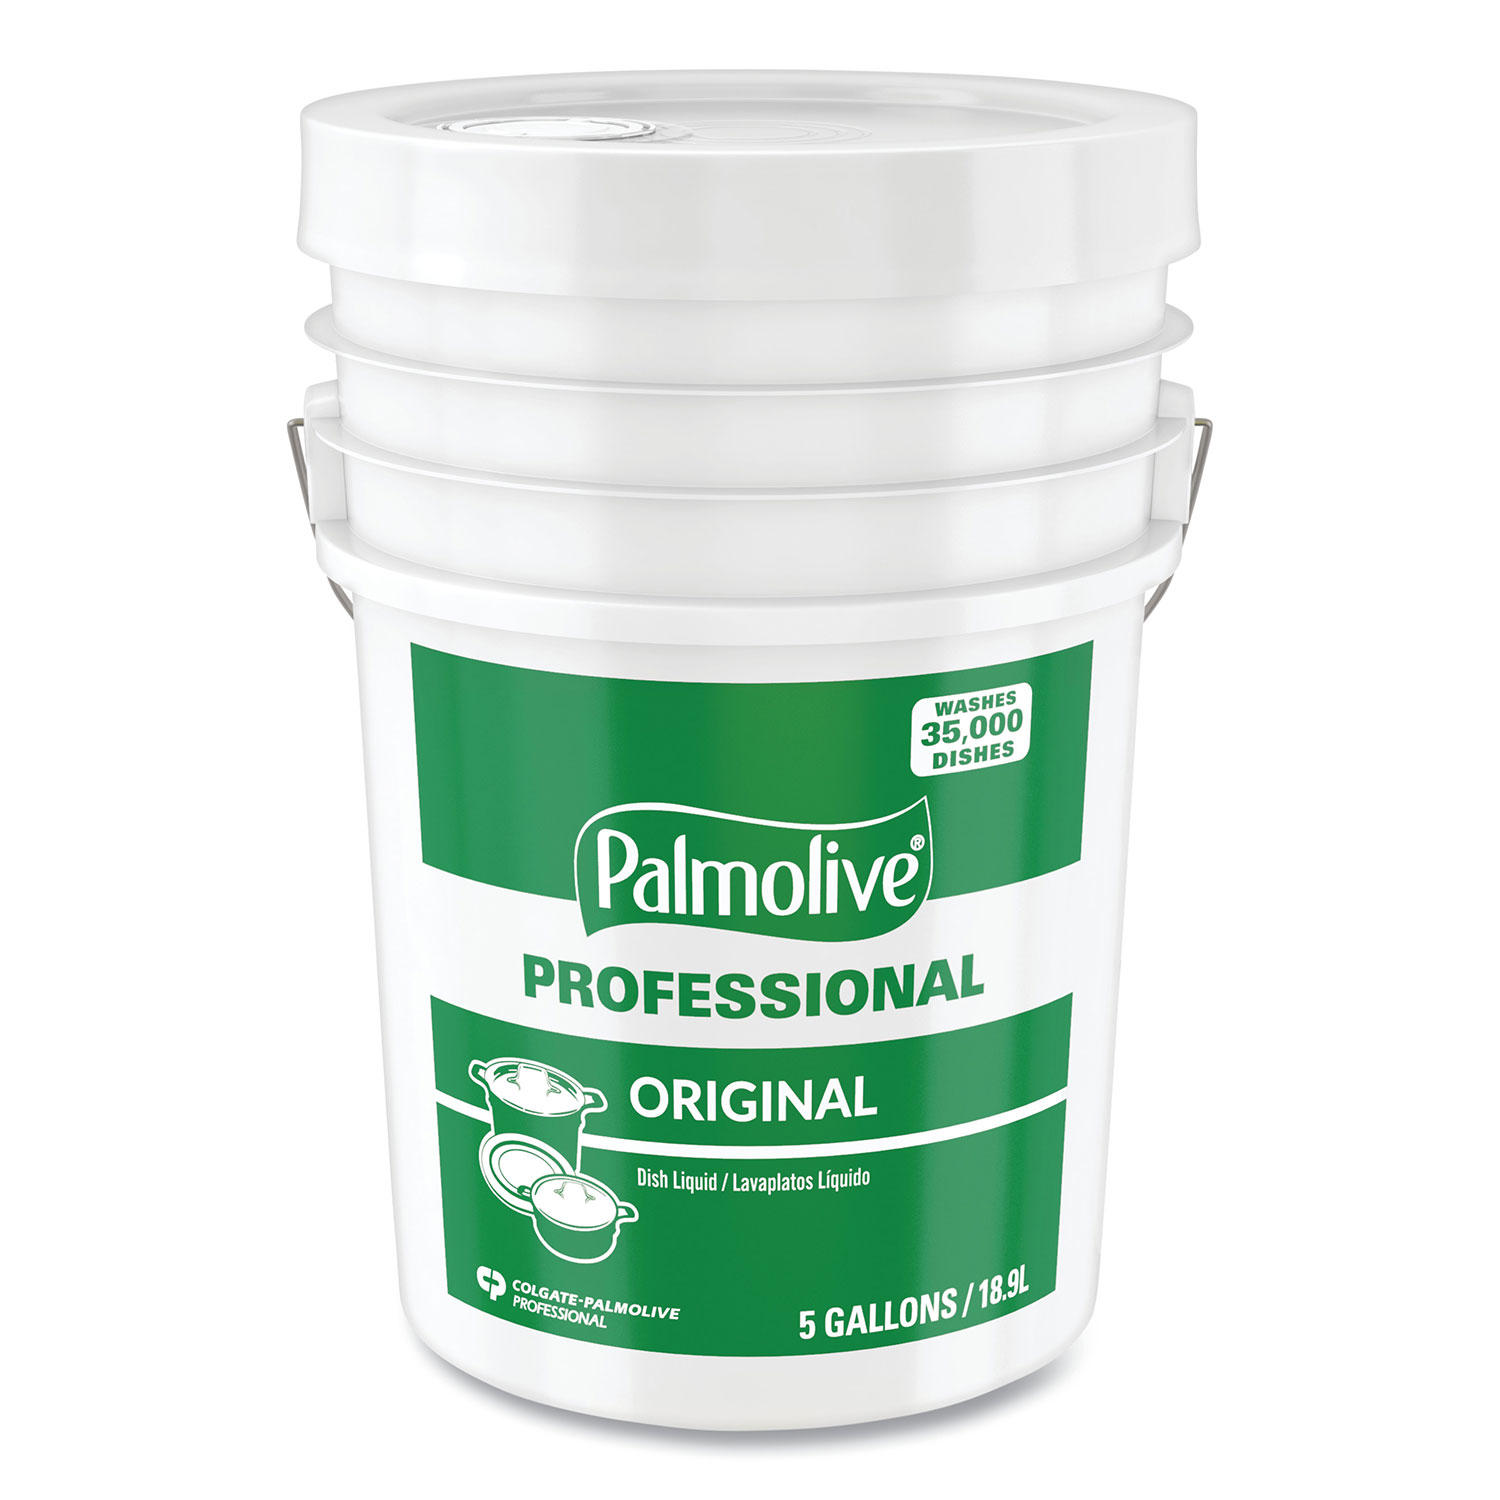 Palmolive Professional Dishwashing Liquid, Original Scent, (5 gallon)